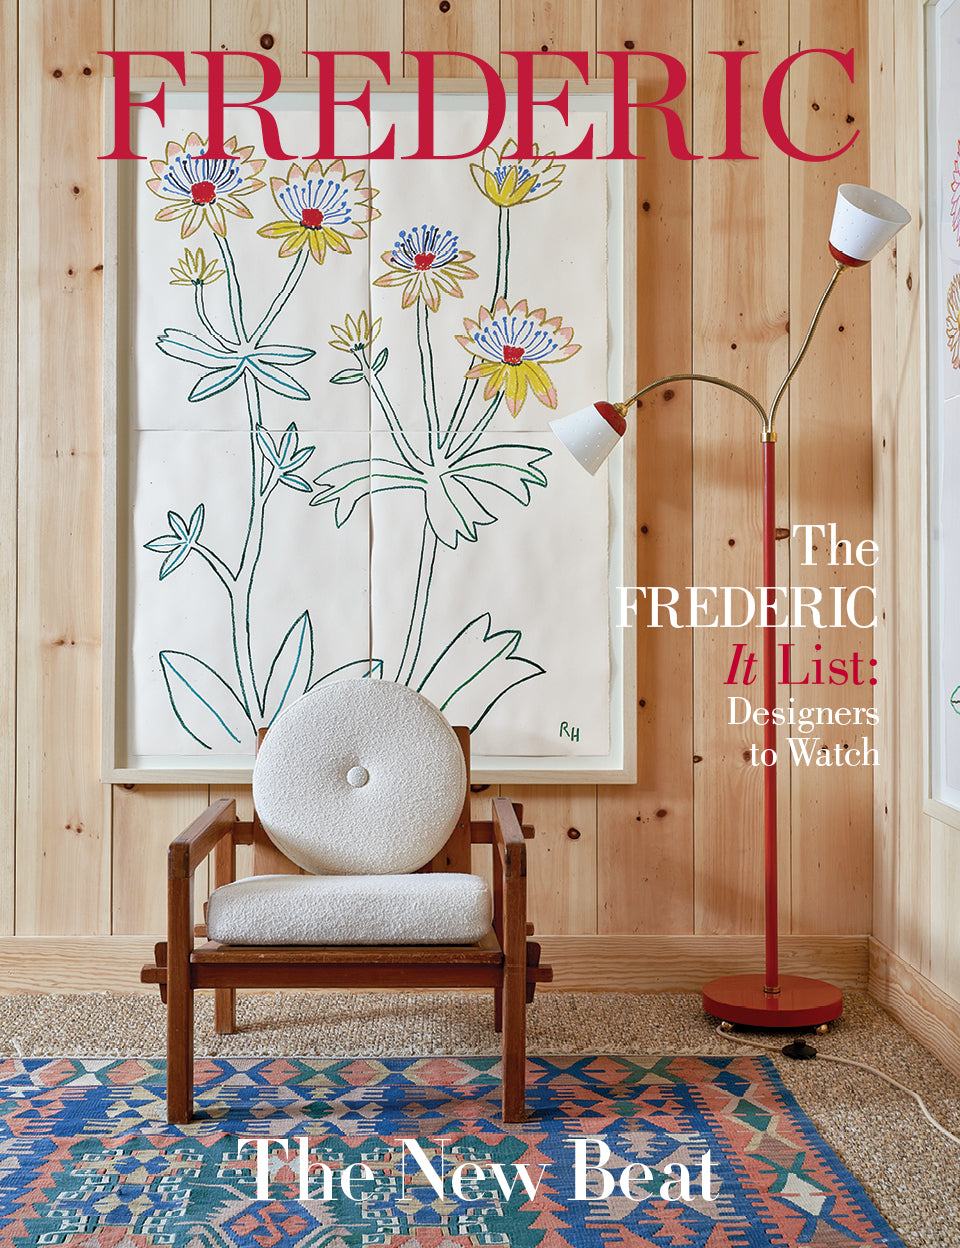 Frederic Magazine